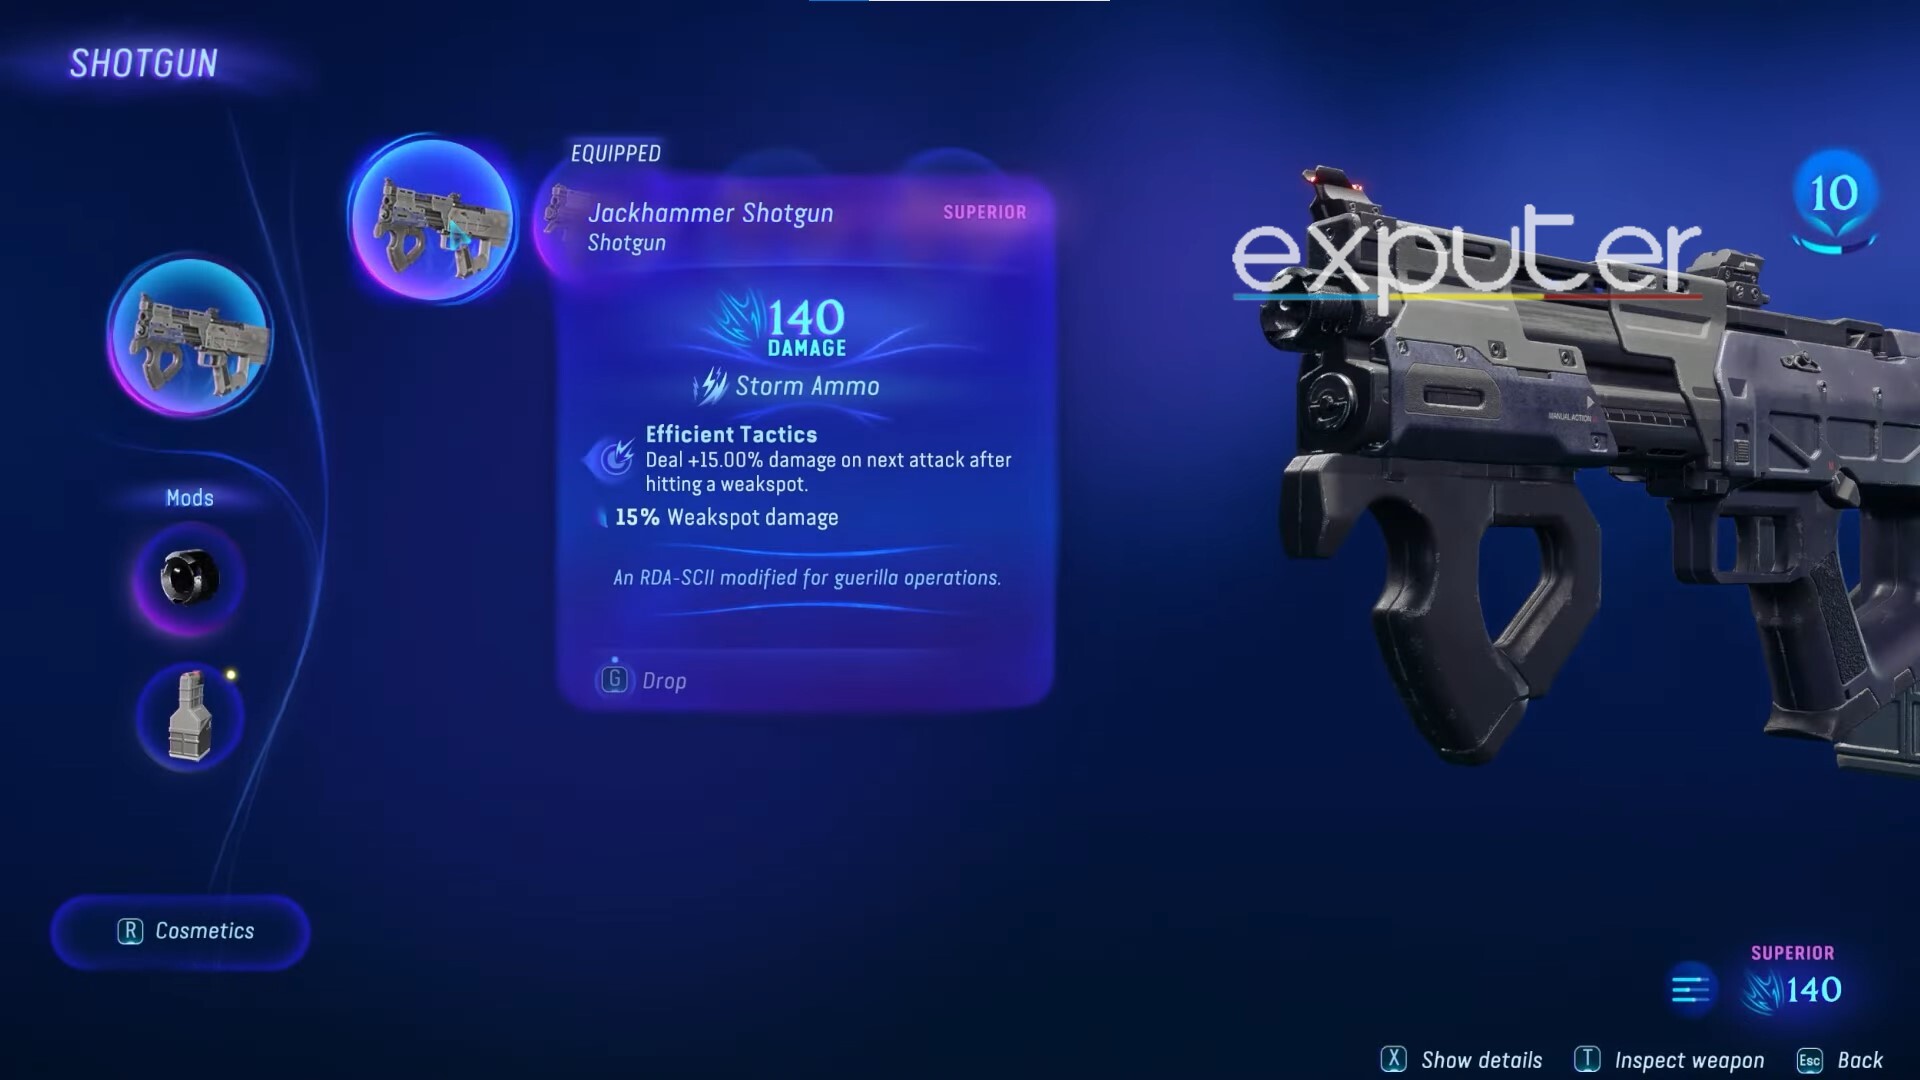 Superior Extractor Shotgun In Game